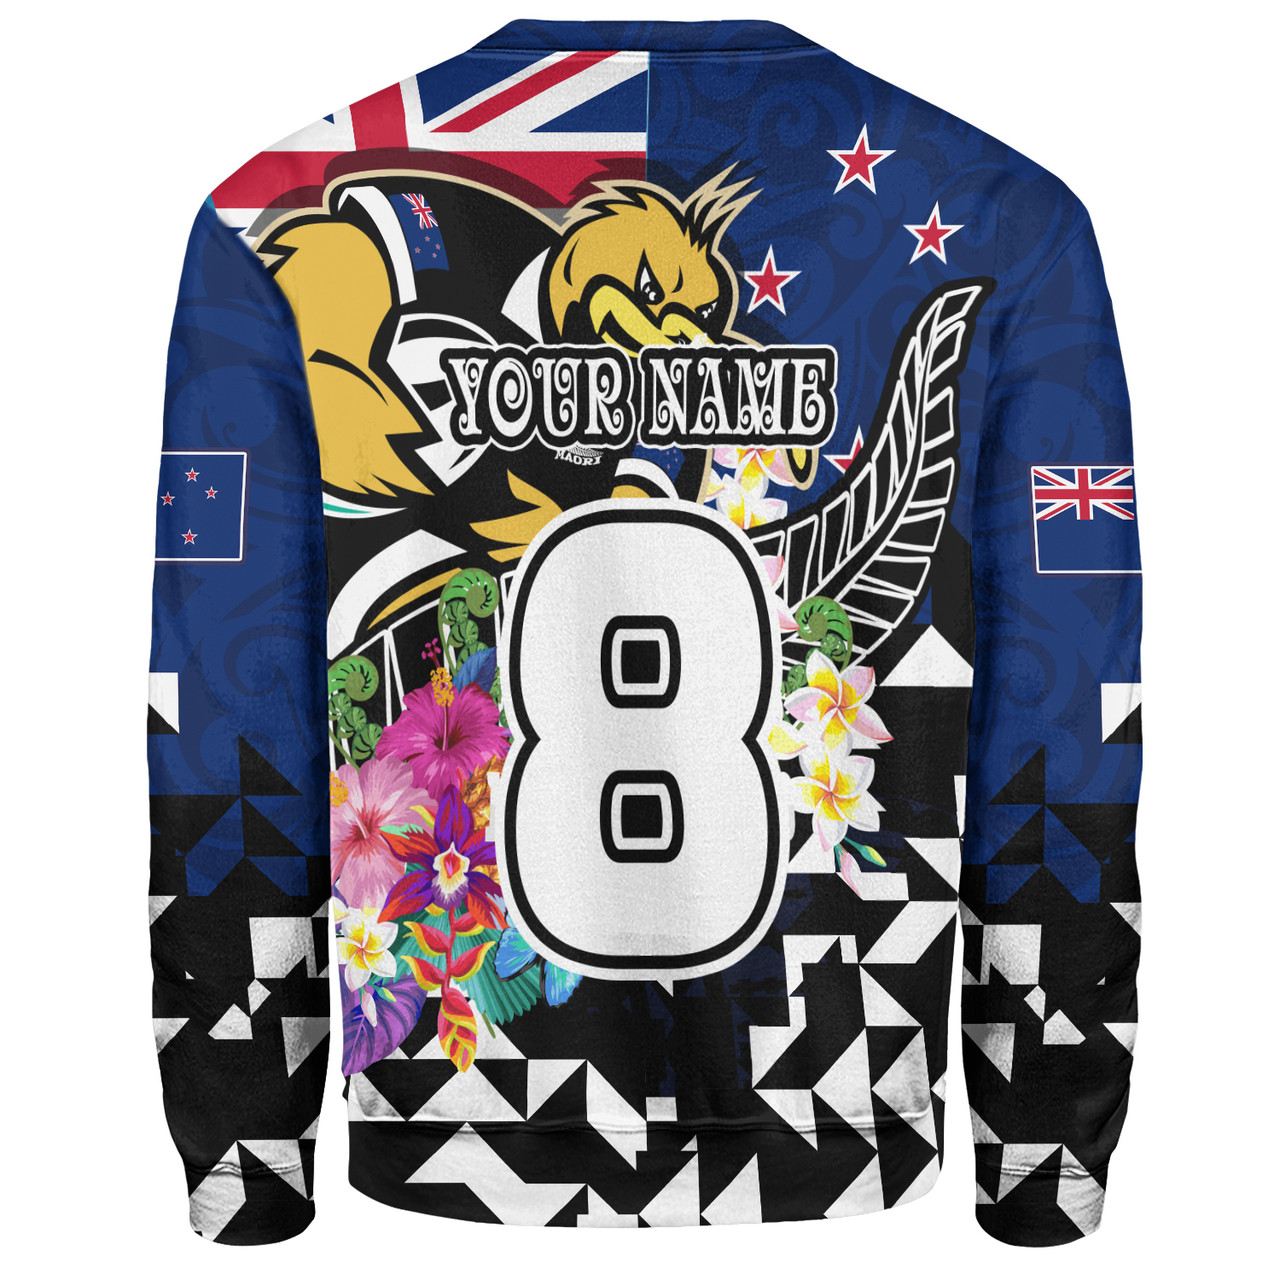 New Zealand Sweatshirt Custom Maori Kiwis Rugby Silver Fern Black Hexagon Tropical Jersey